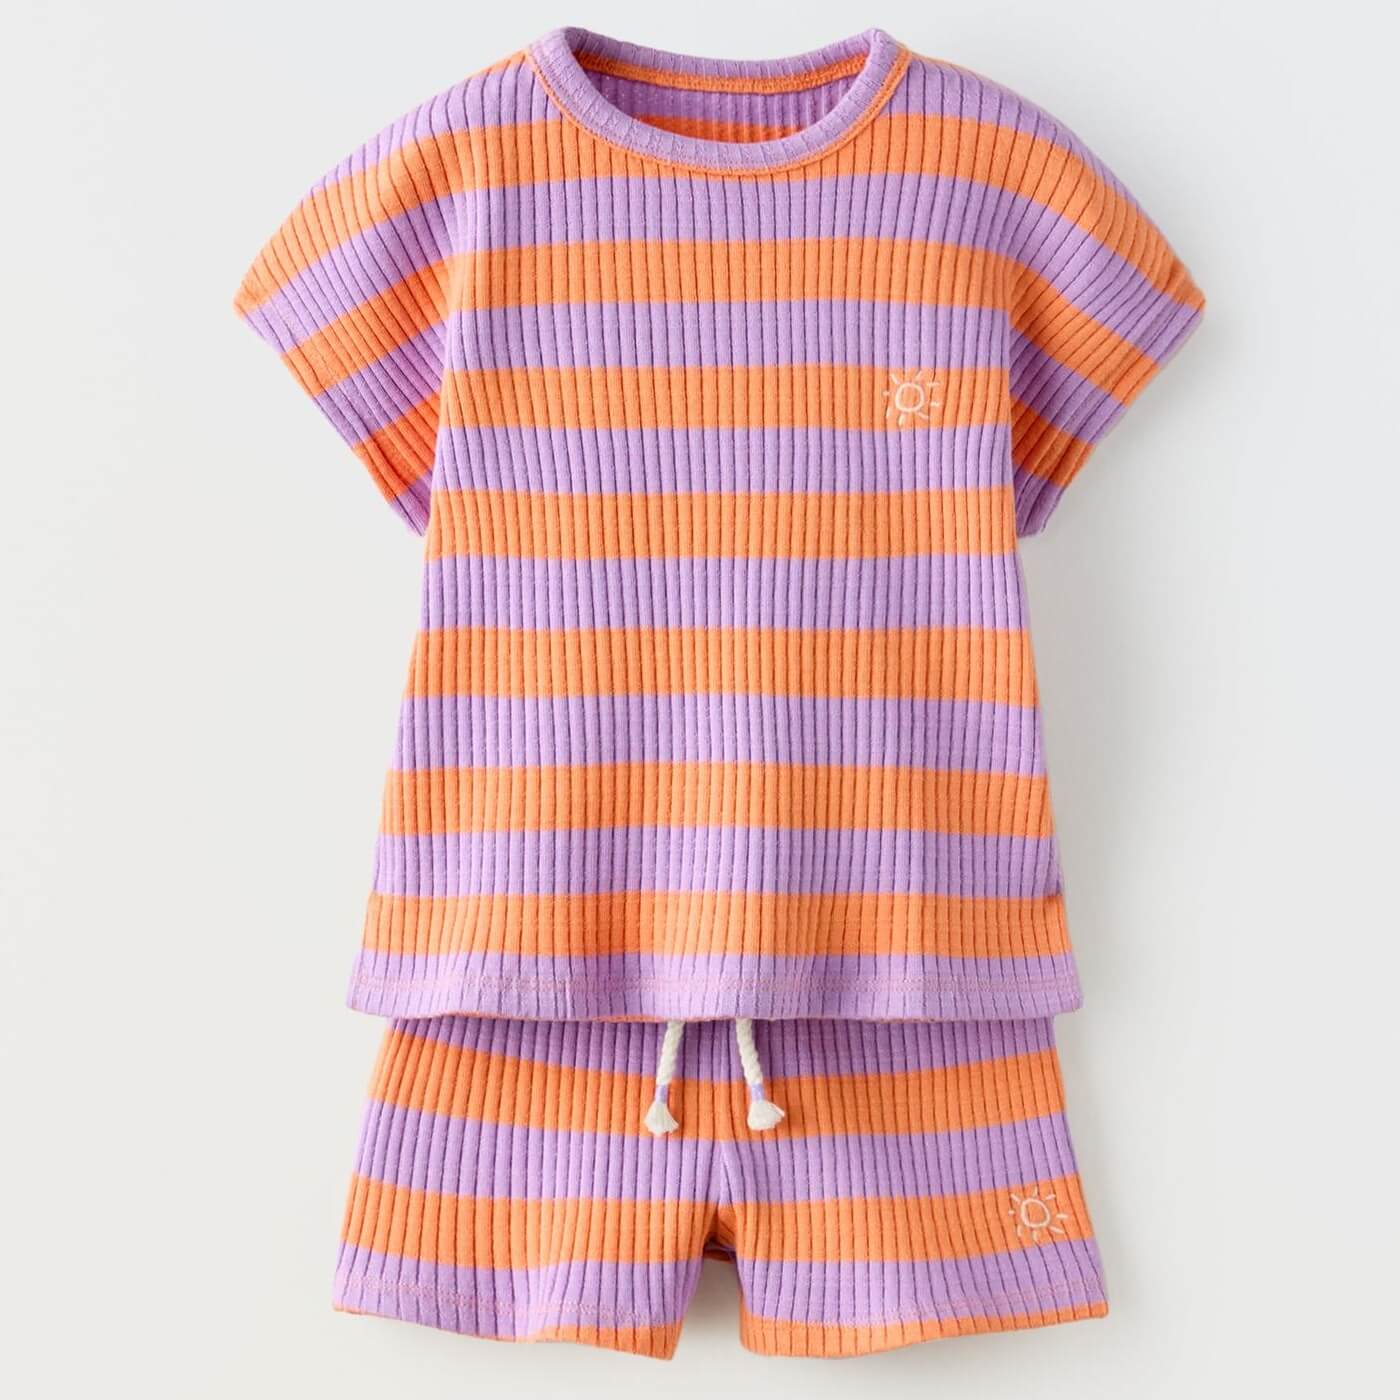 Комплект футболка + шорты Zara Striped Ribbed, оранжевый/сиреневый футболка zara contrast ribbed striped синий белый